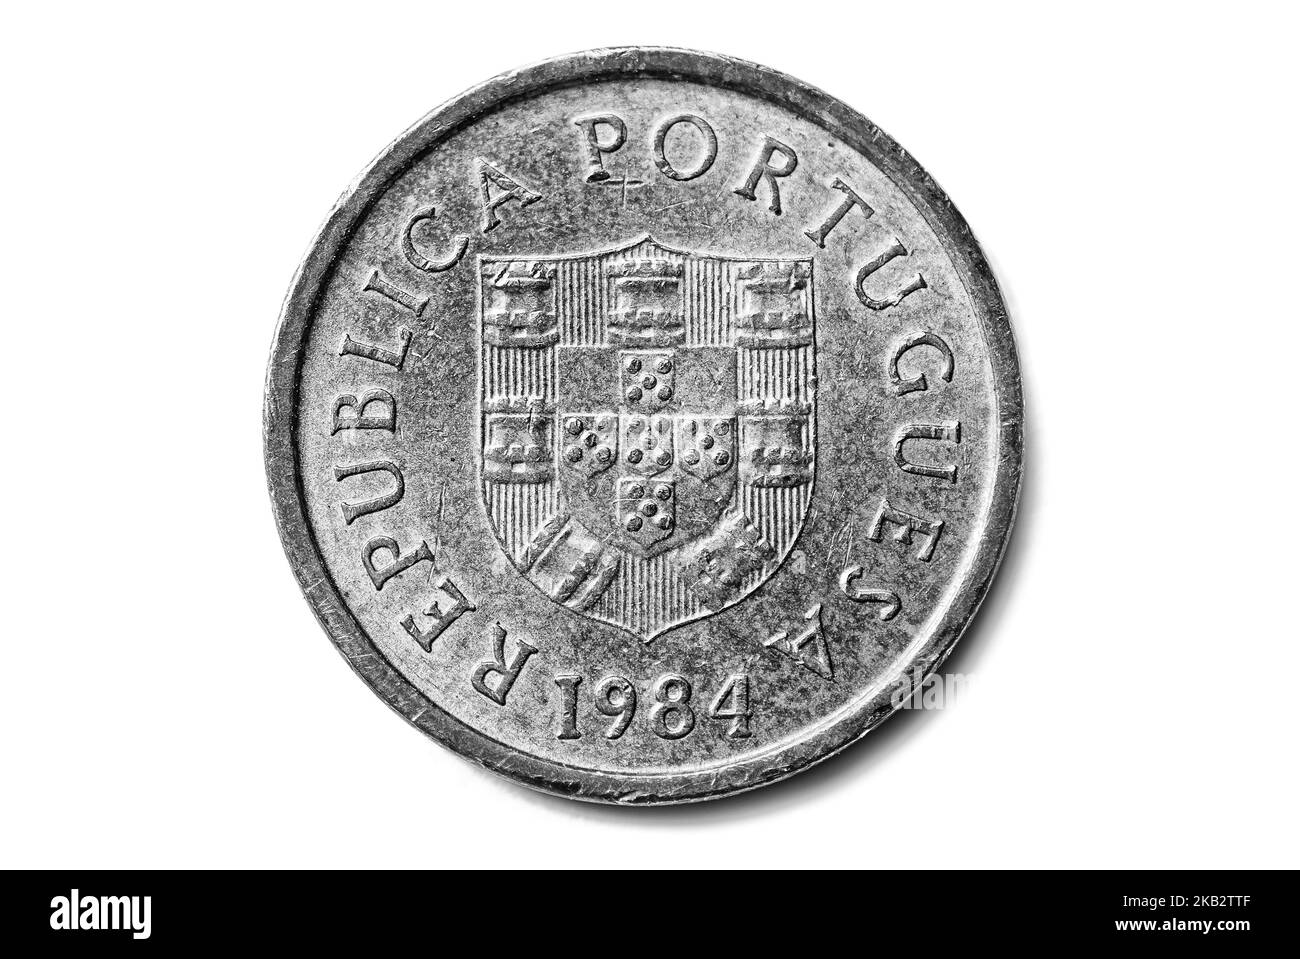 Photo coins Portugal, 1 escudo, 1984 Stock Photo